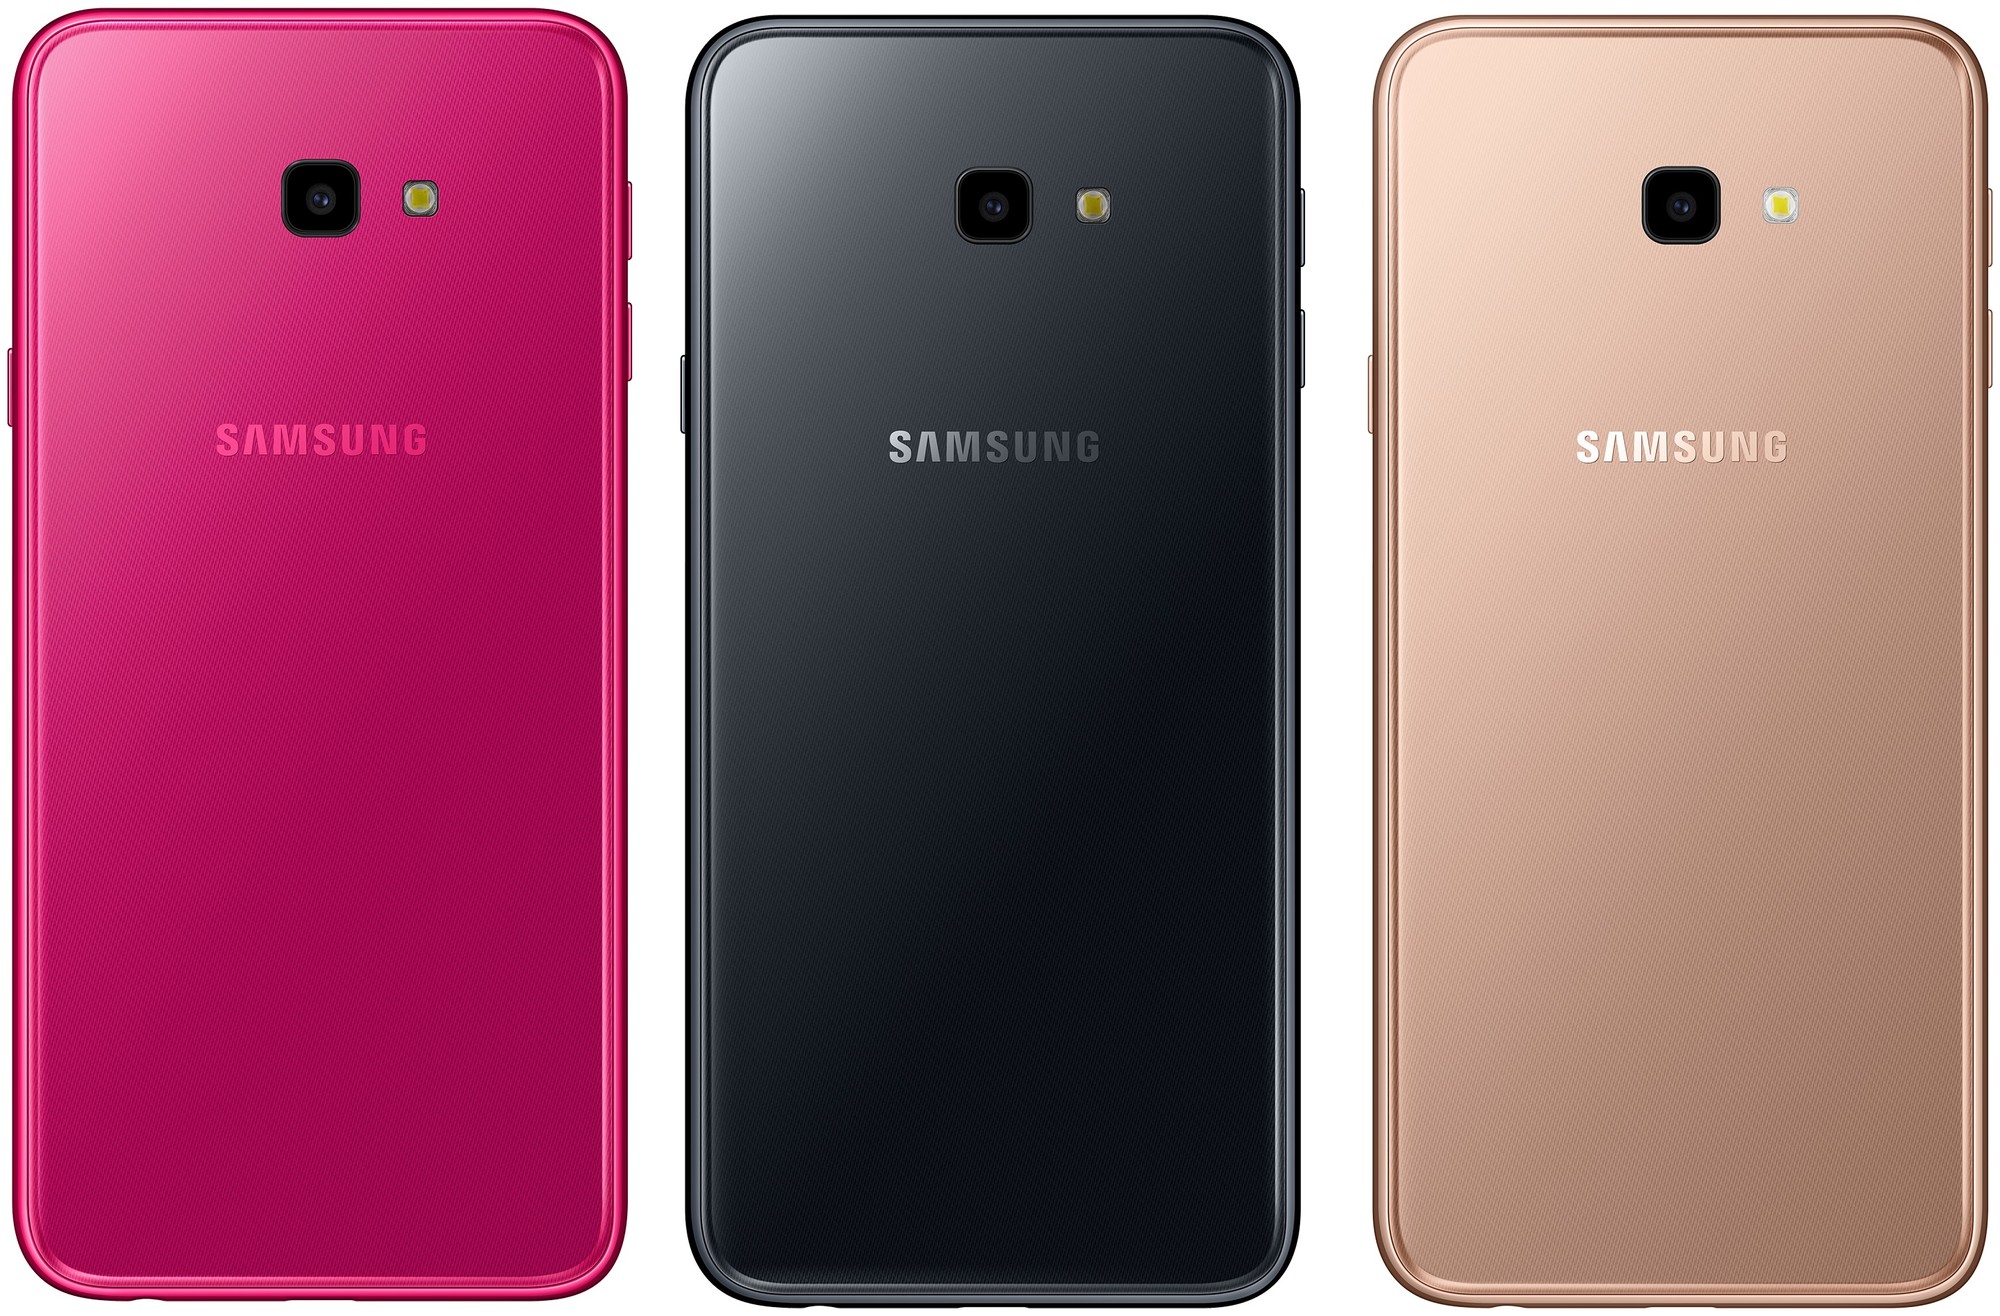 Samsung Galaxy J4+ 32GB - Specs and Price - Phonegg